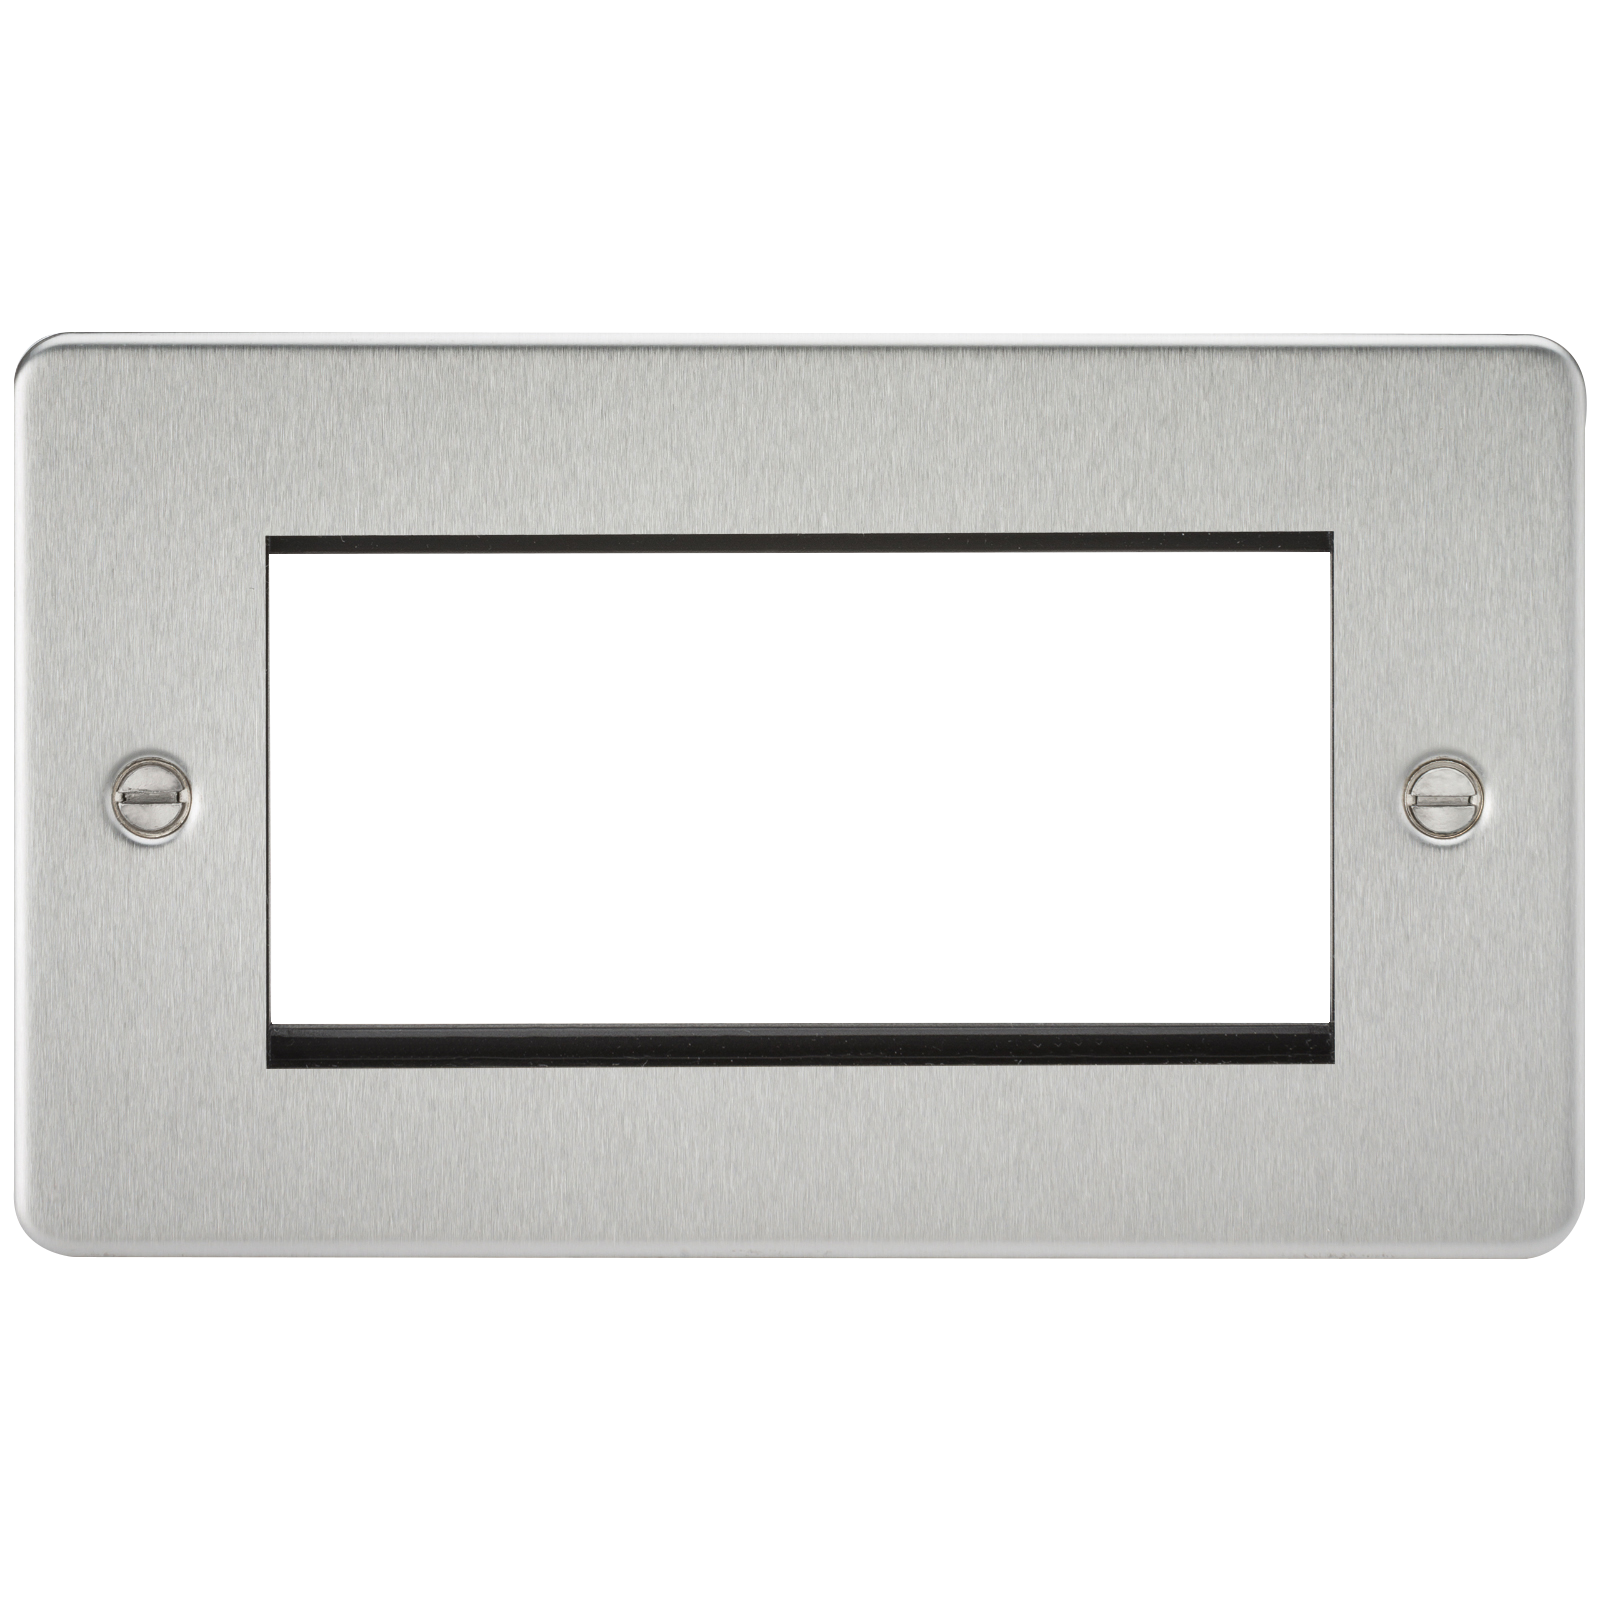 Flat Plate 4G Modular Faceplate - Brushed Chrome - FP4GBC 